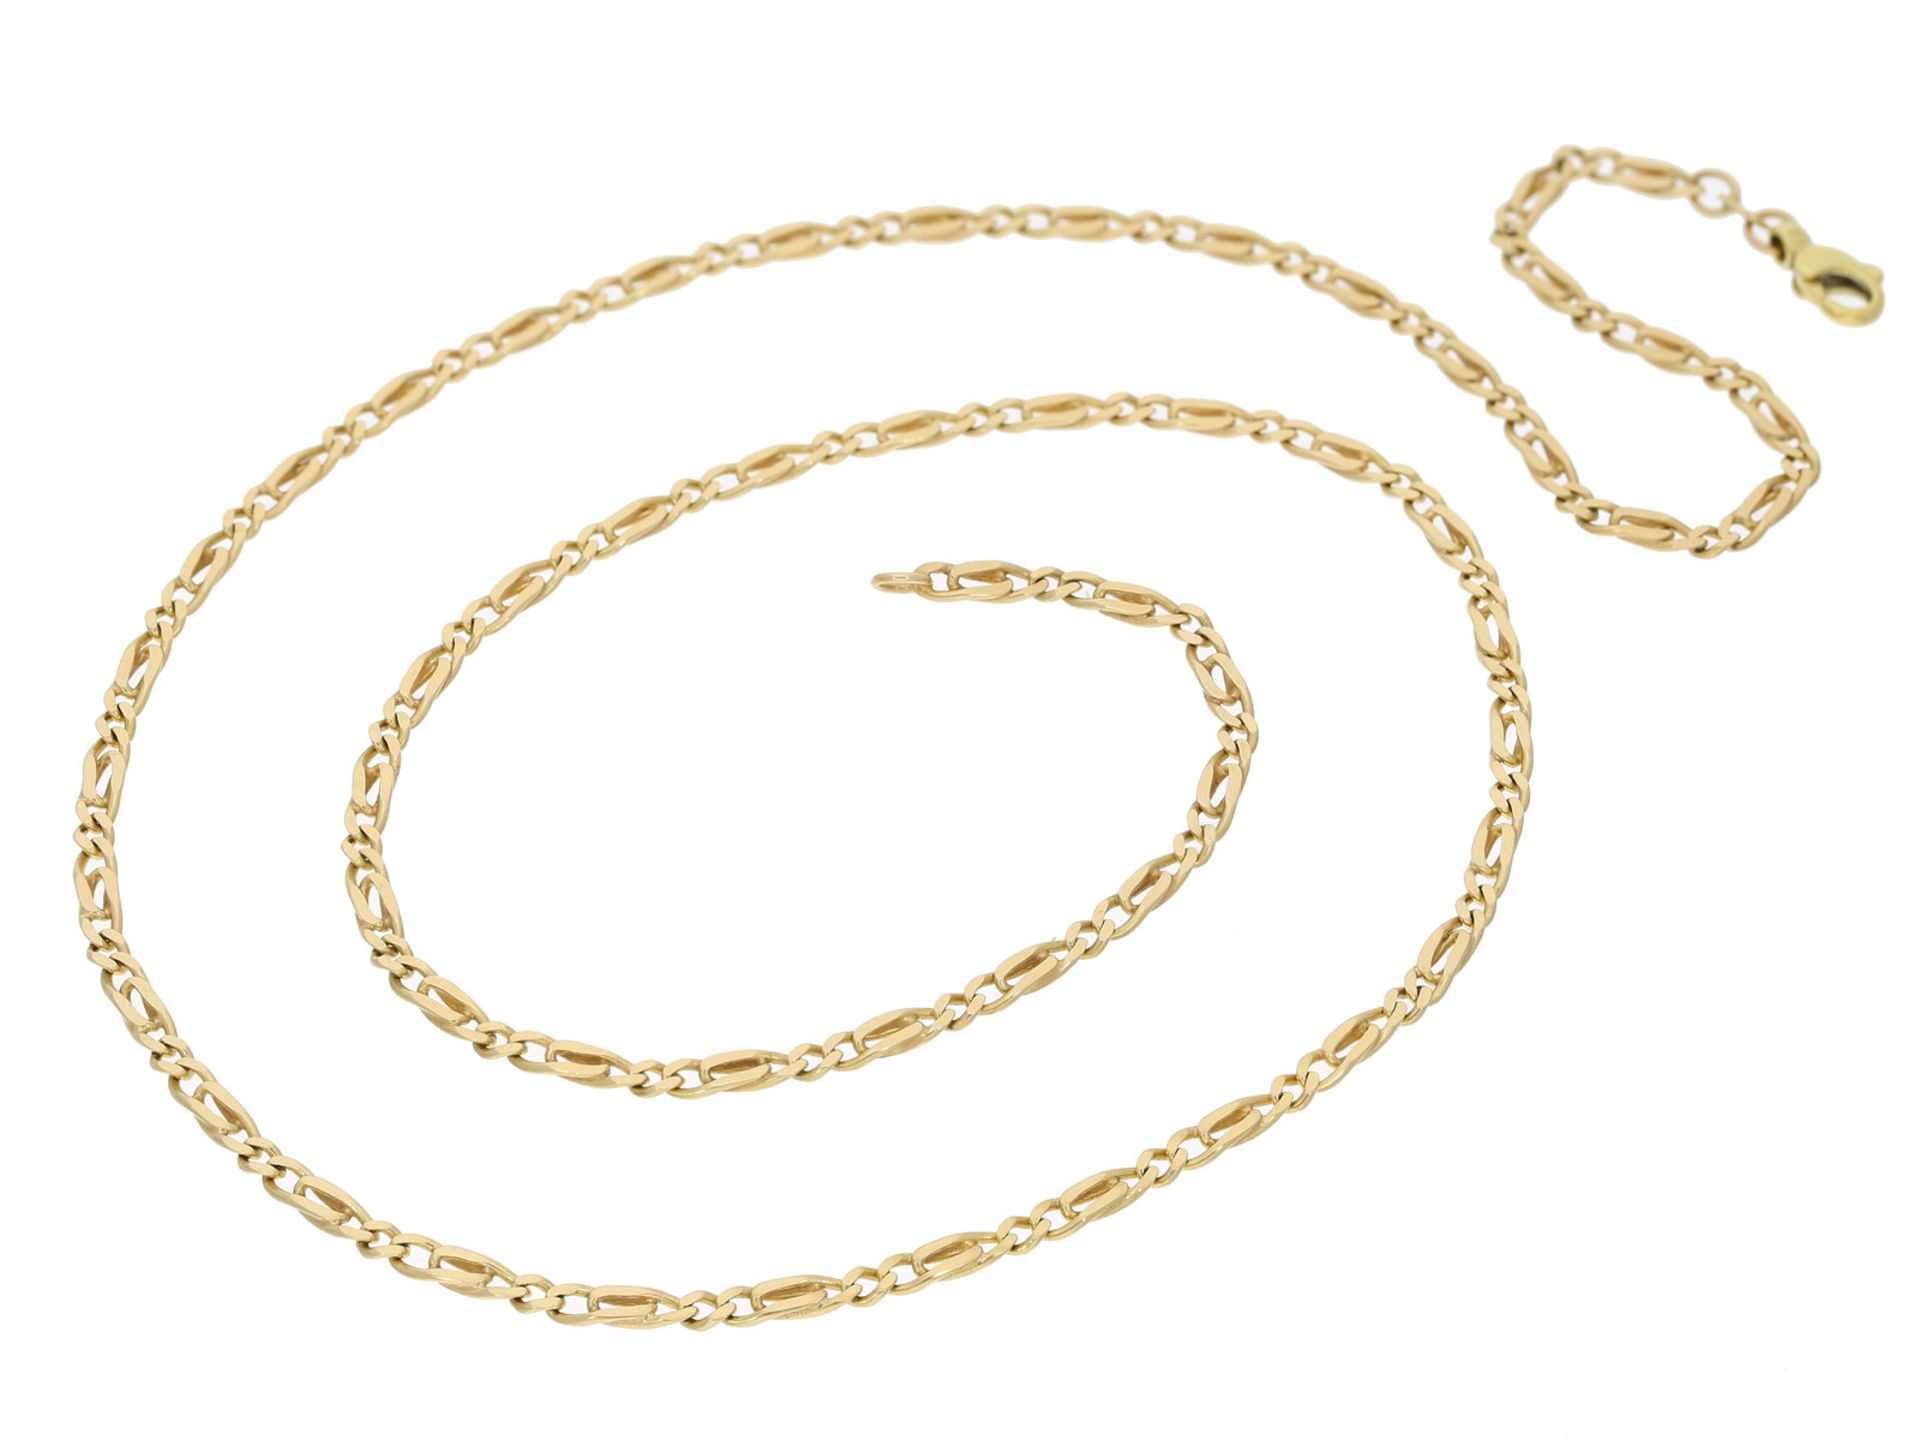 Kette/Collier: lange GoldketteCa. 61cm lang, ca. 12,8g, 14K Gelbgold, ca. 3mm breit, Federring,